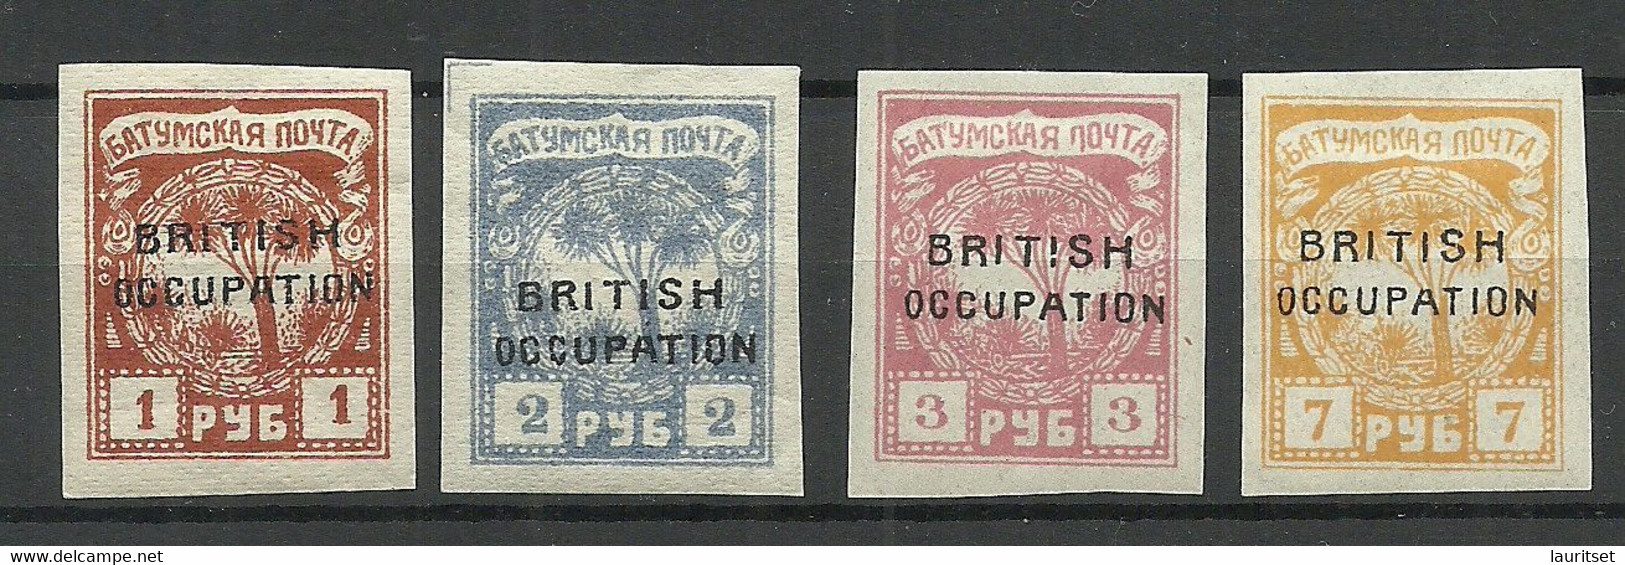 BATUM Batumi RUSSLAND RUSSIA 1919 British Occupation, 4 Stamps,* - 1919-20 Ocucpación Británica